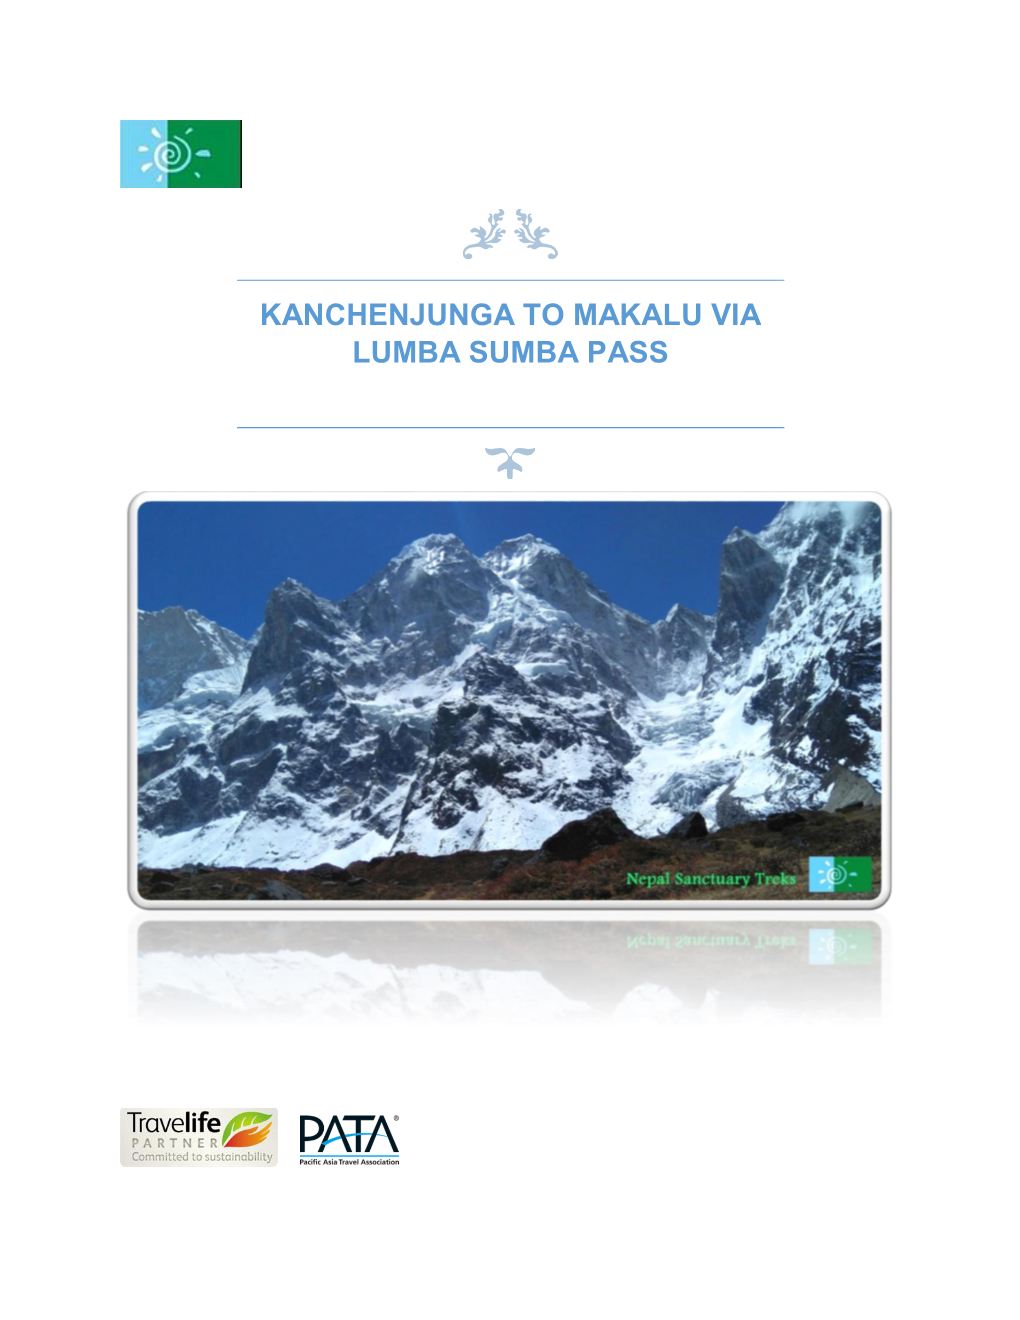 Kanchenjunga to Maklau Via Lumba Sumba Pass